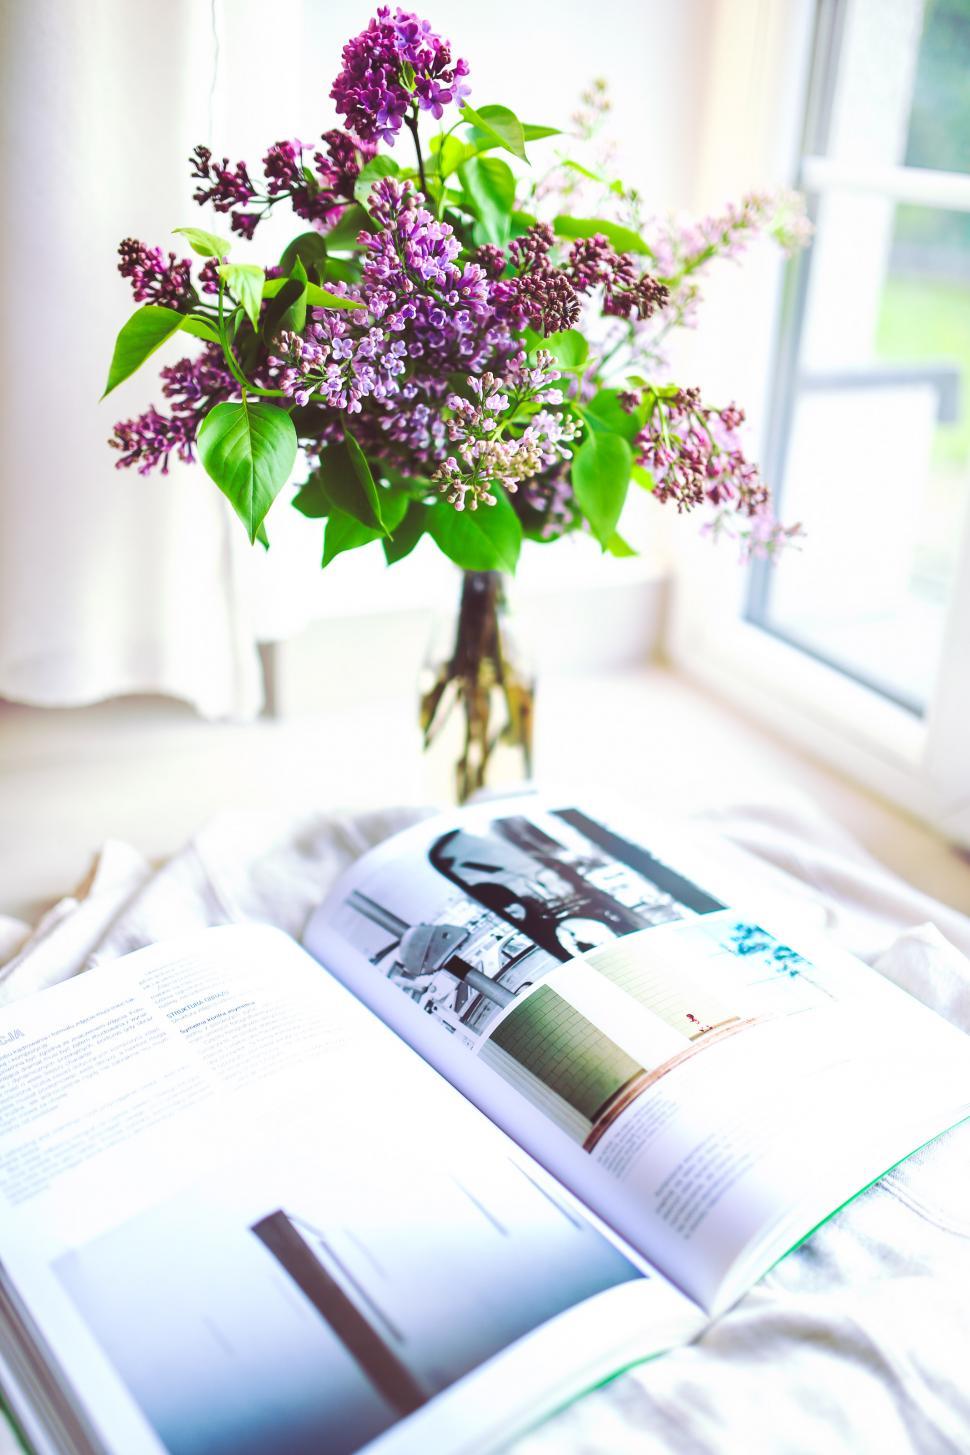 Free Image of Book Decor Decoration Flower Newspaper Plant Sambucus elder elderberry magazine violet business home house 